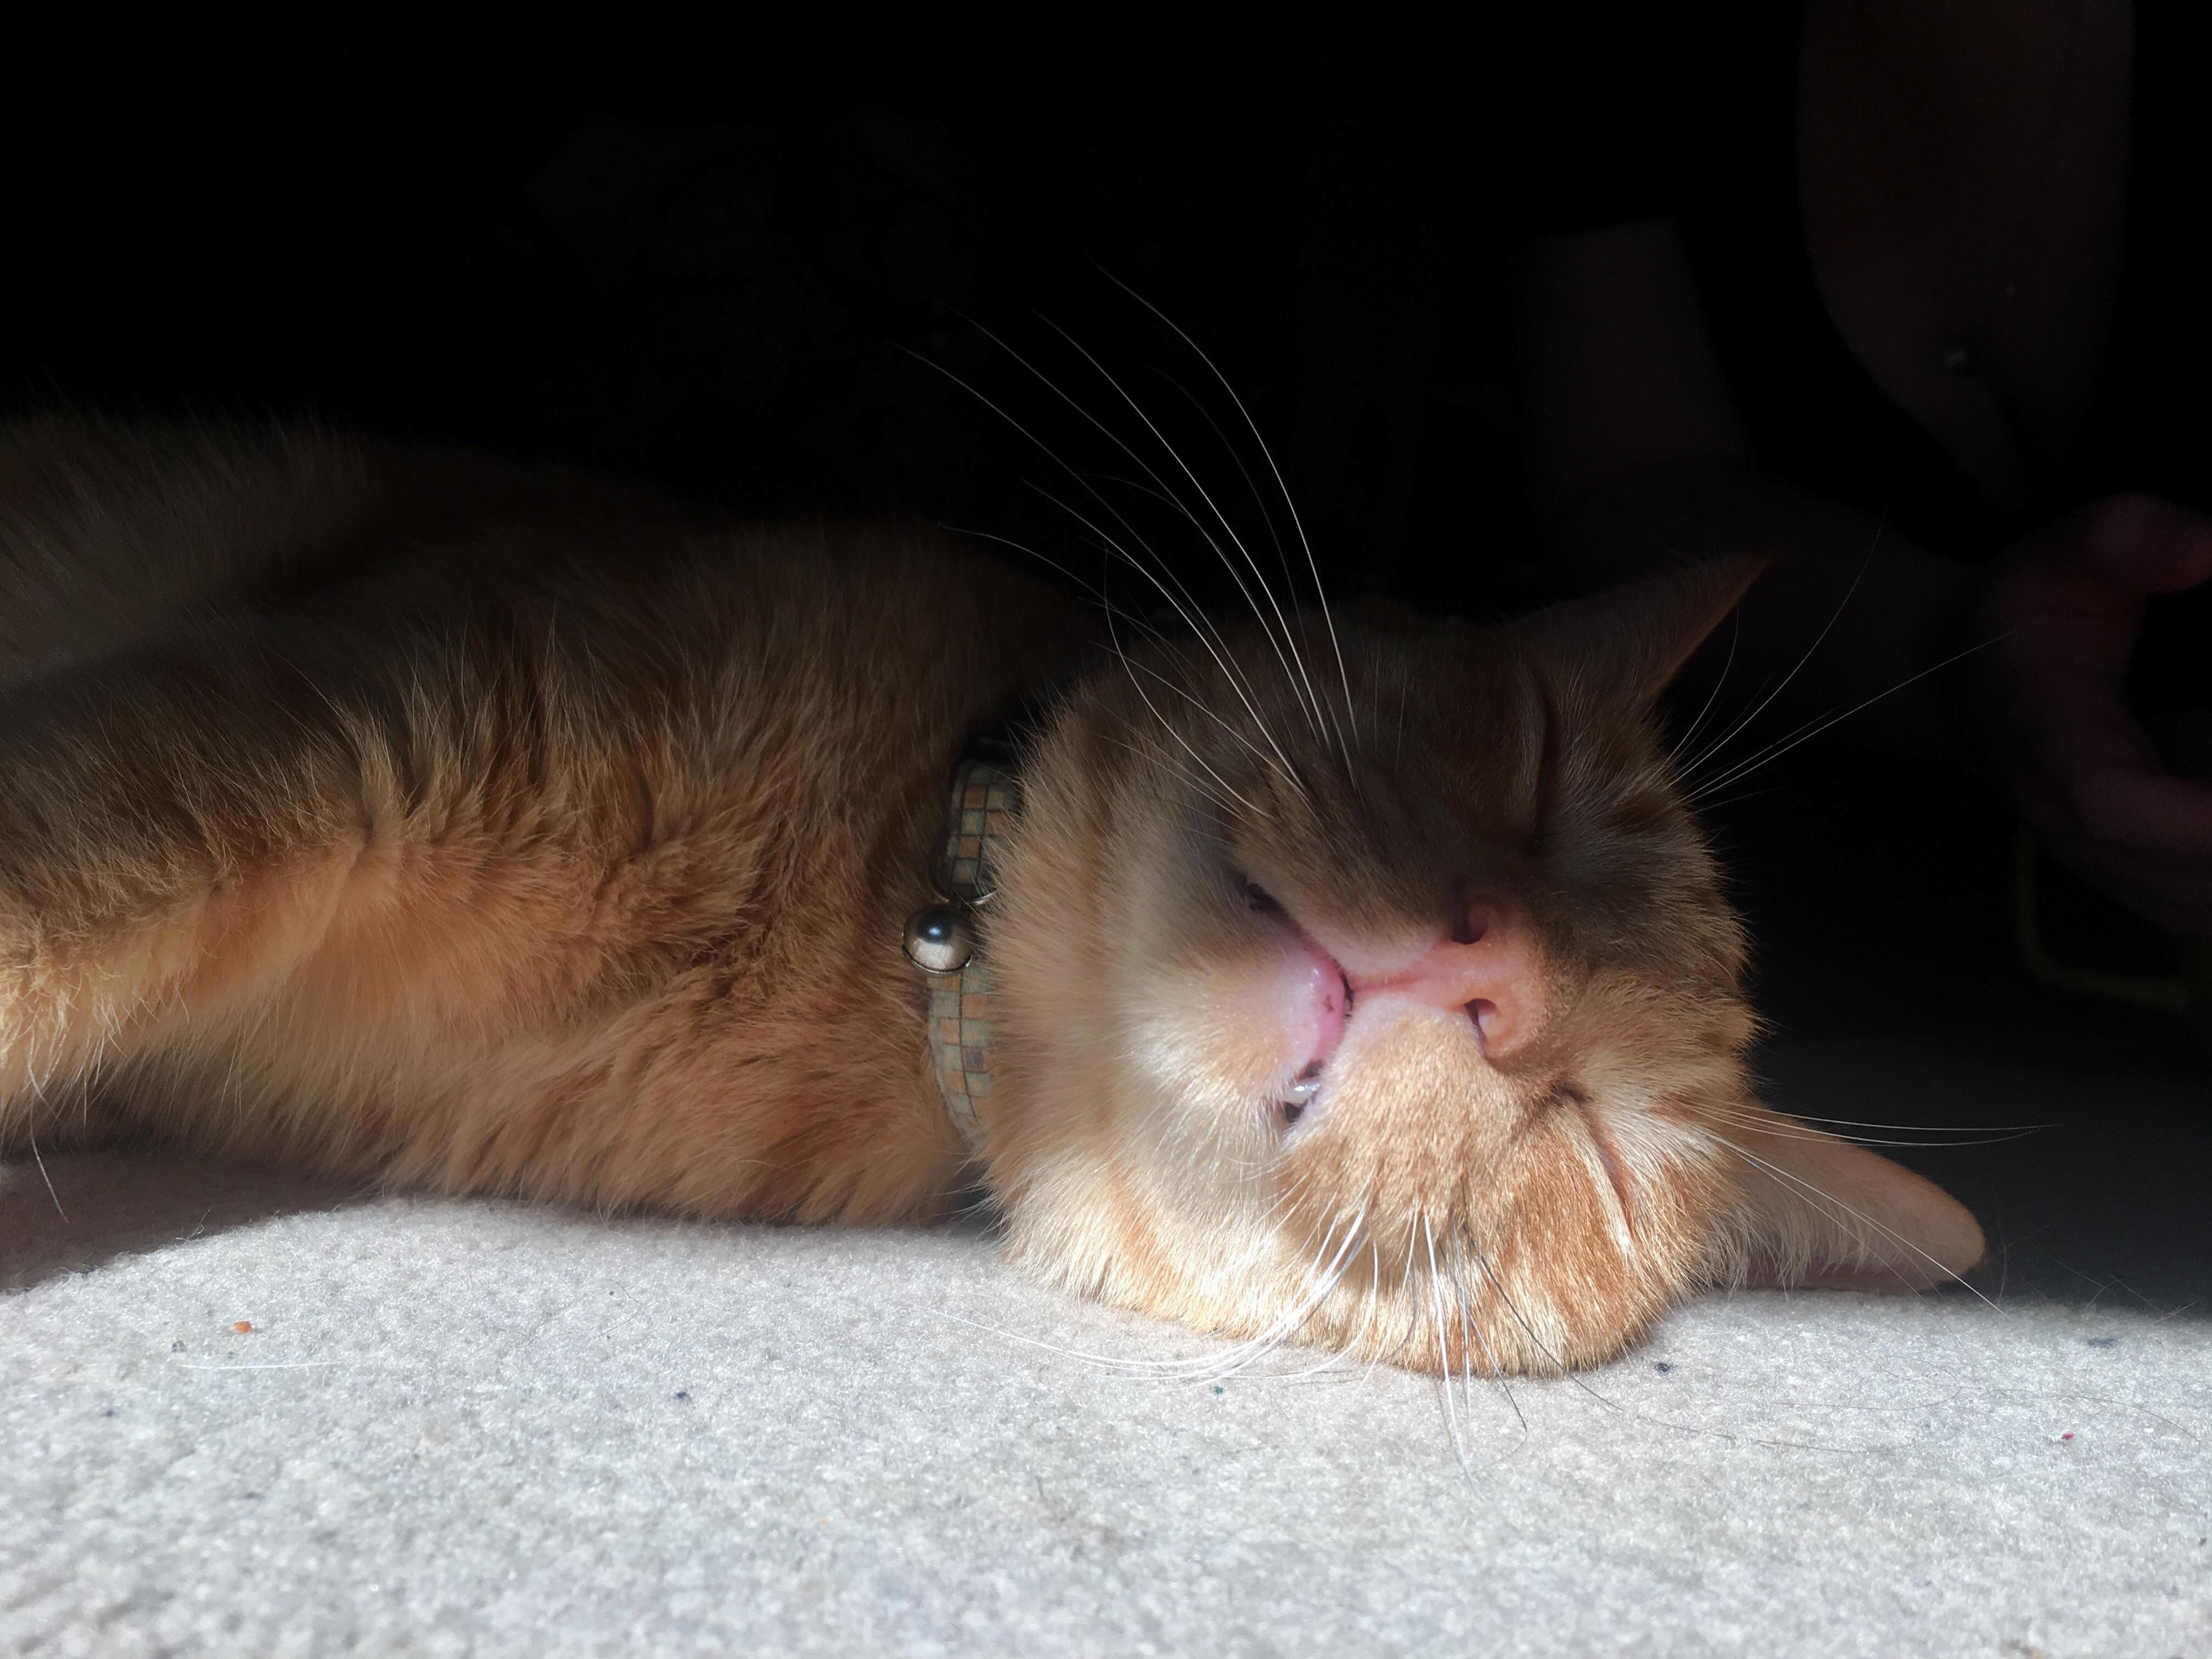 Arthur found a nice sun spot for his nap